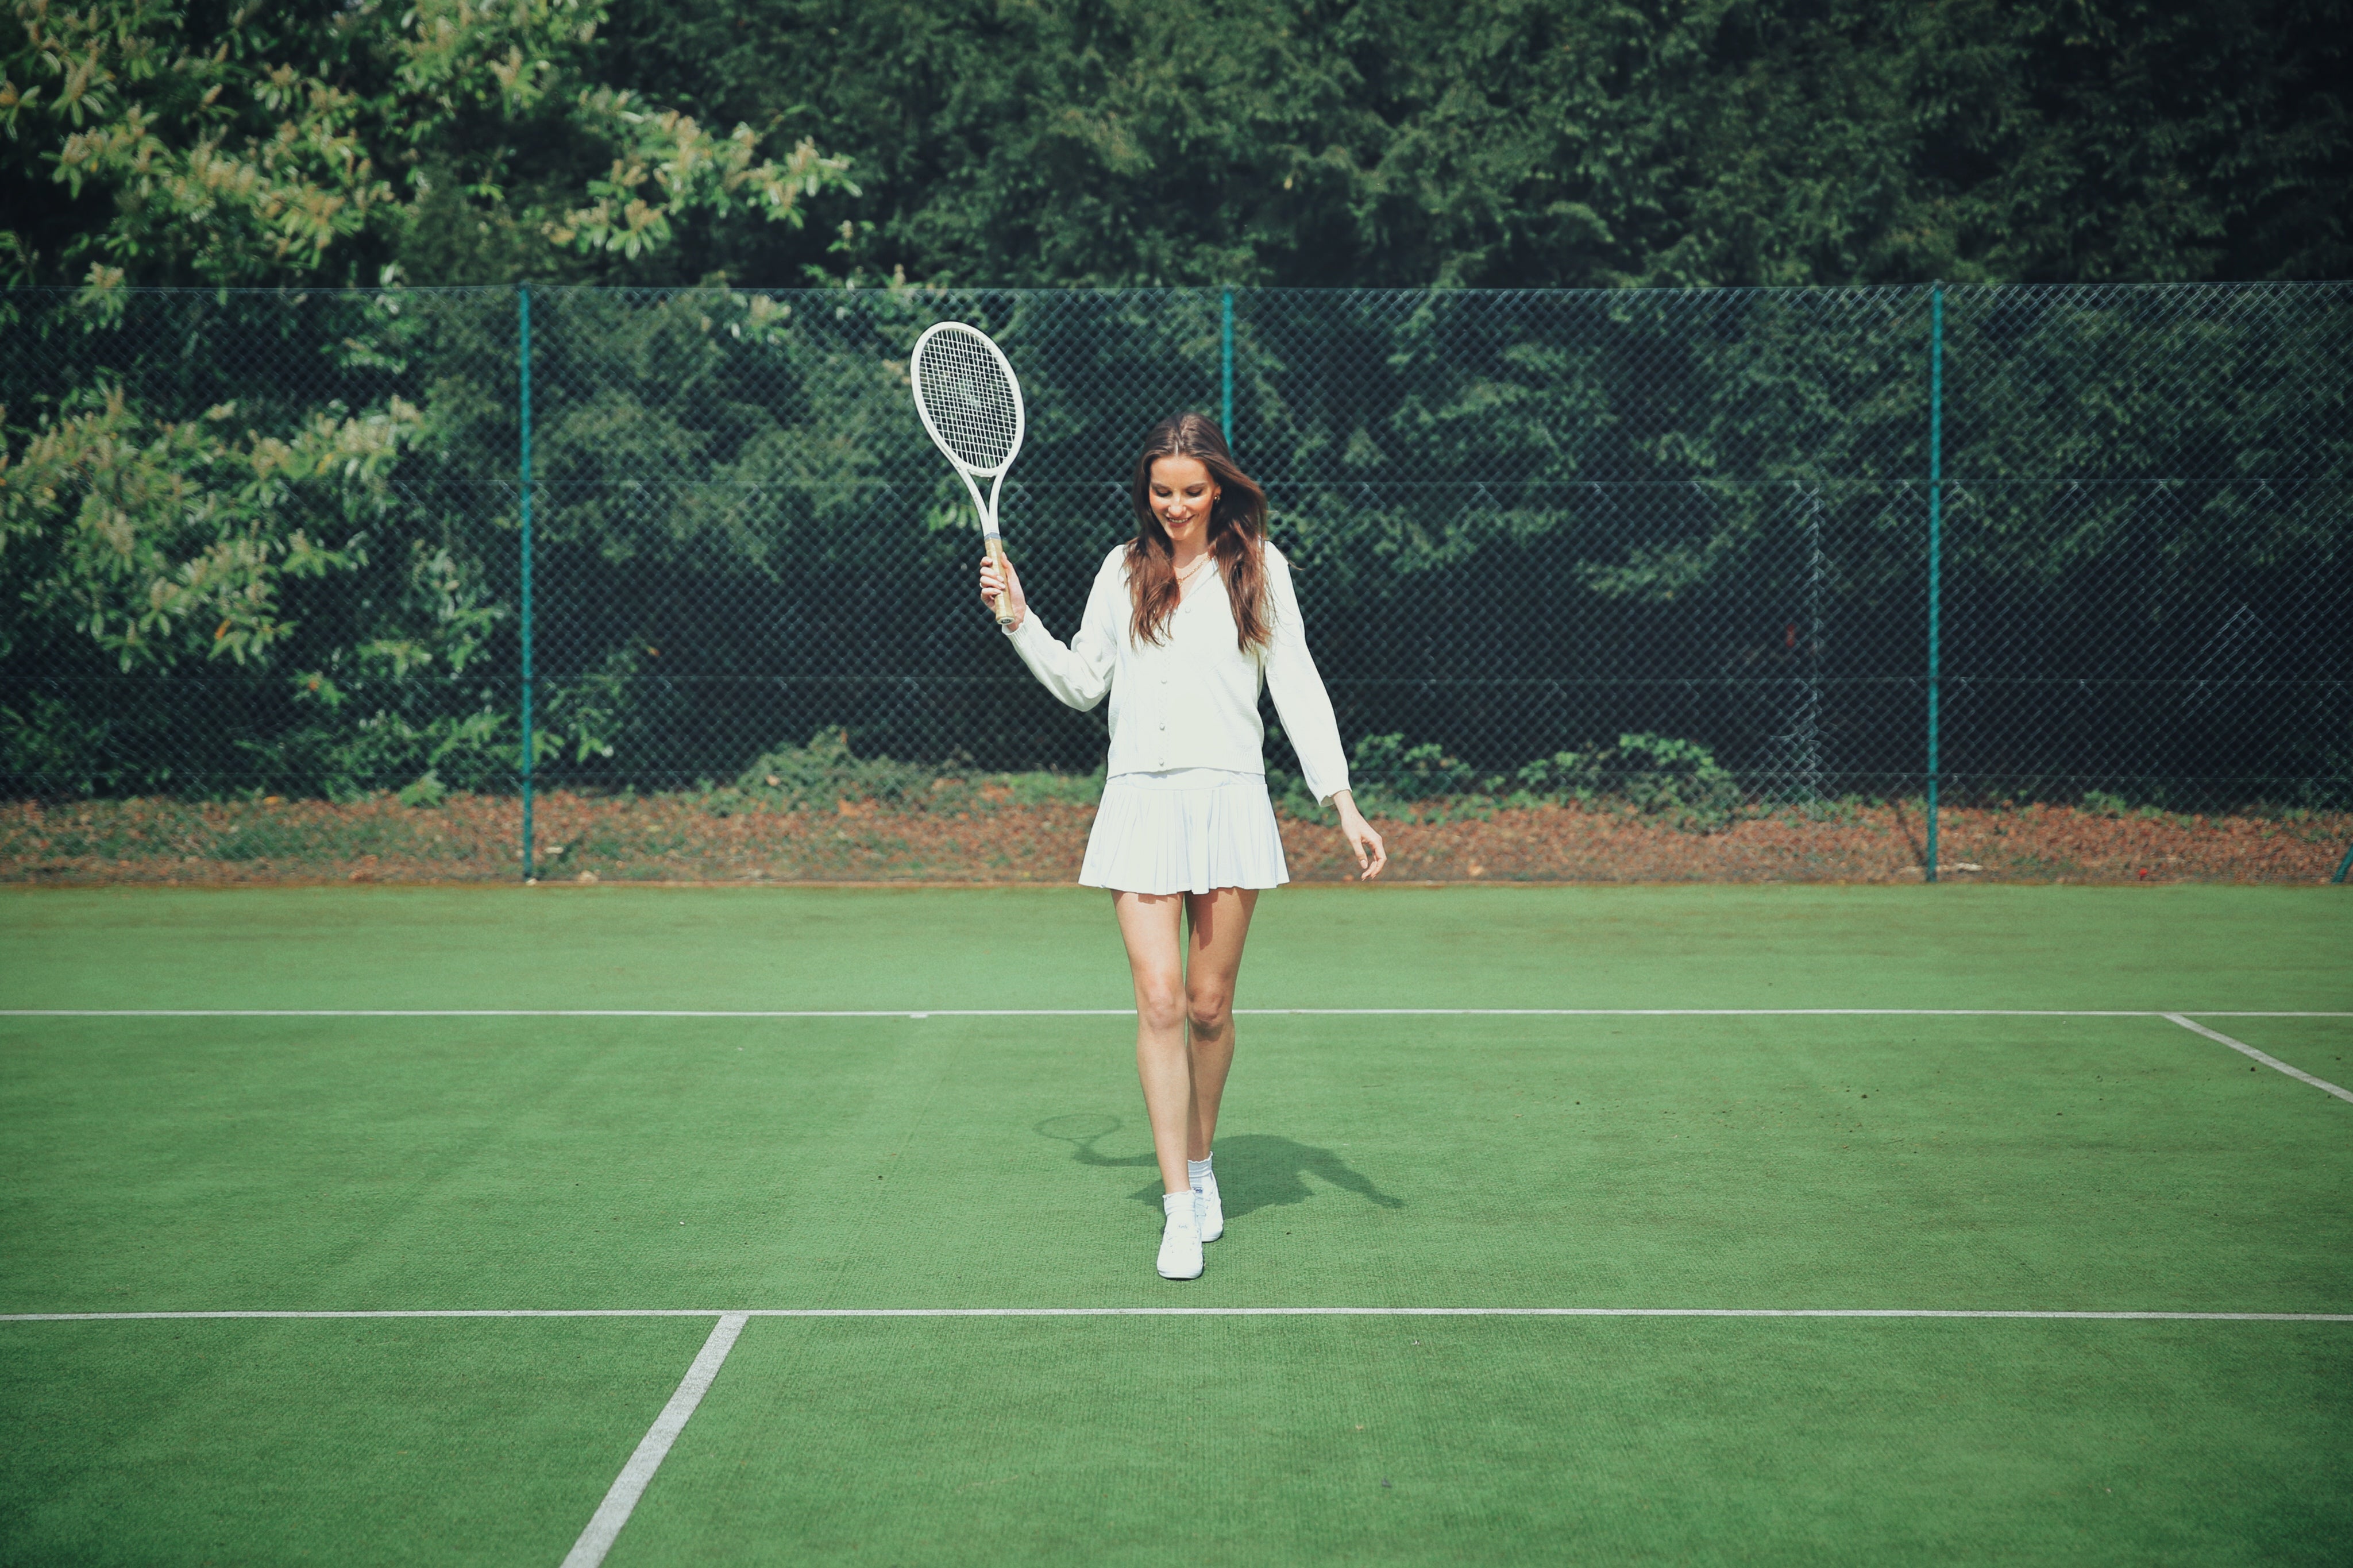 exeat-white-tennis-dress-pleated-lawn-tennis-grass-england-four-seasons-hampshire-racket.jpg